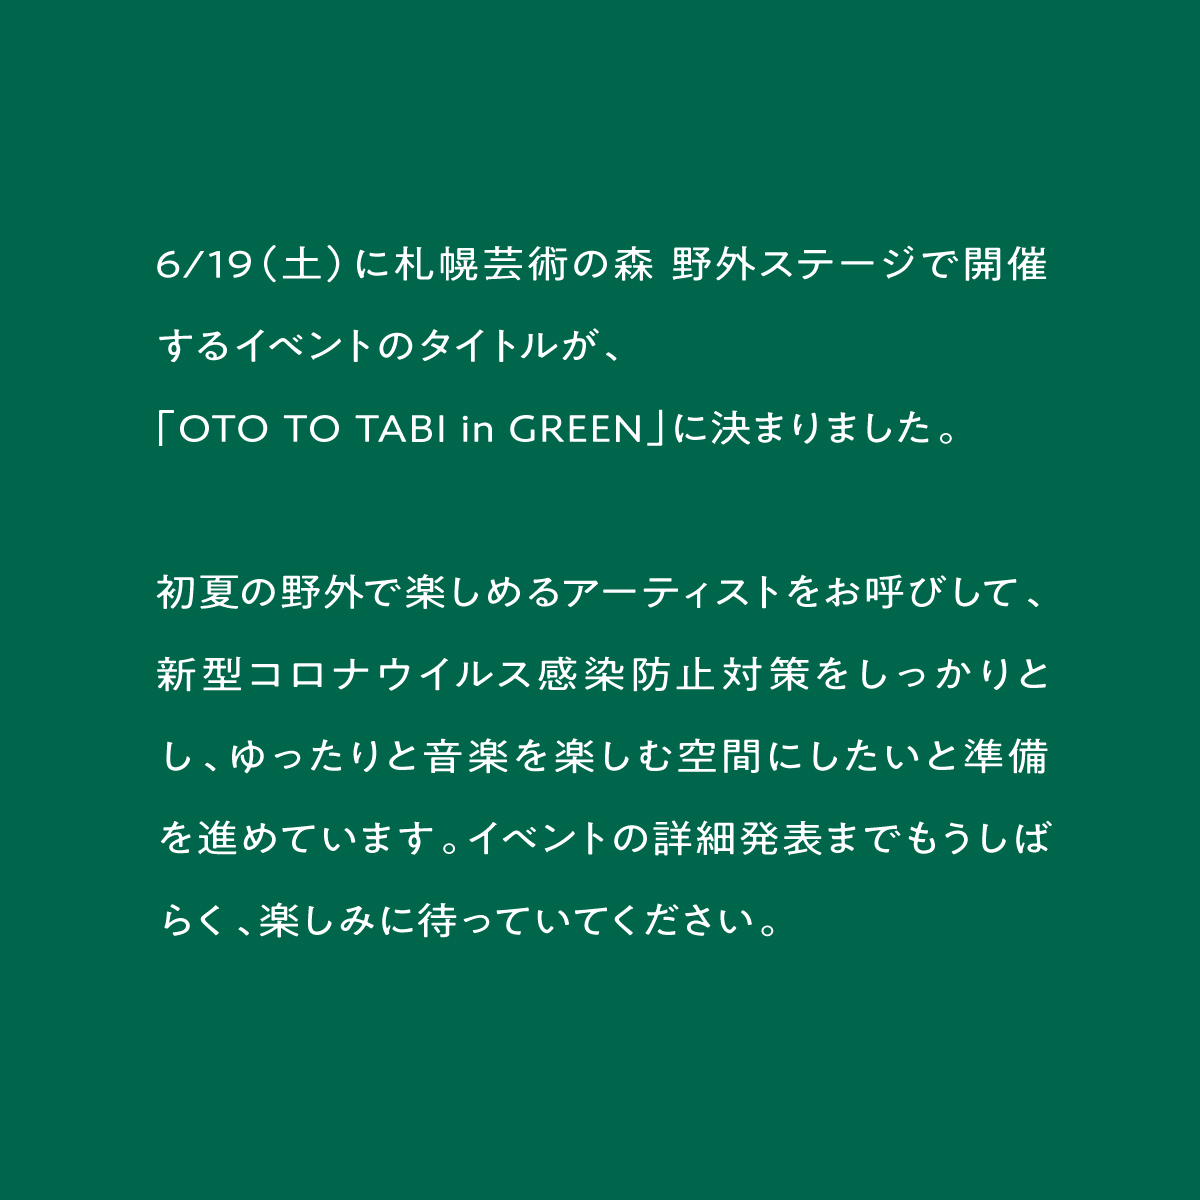 Oto To Tabi おととたび 6 19 土 に札幌芸術の森 野外ステージで開催するイベントのタイトルが Oto To Tabi In Green に決まりました